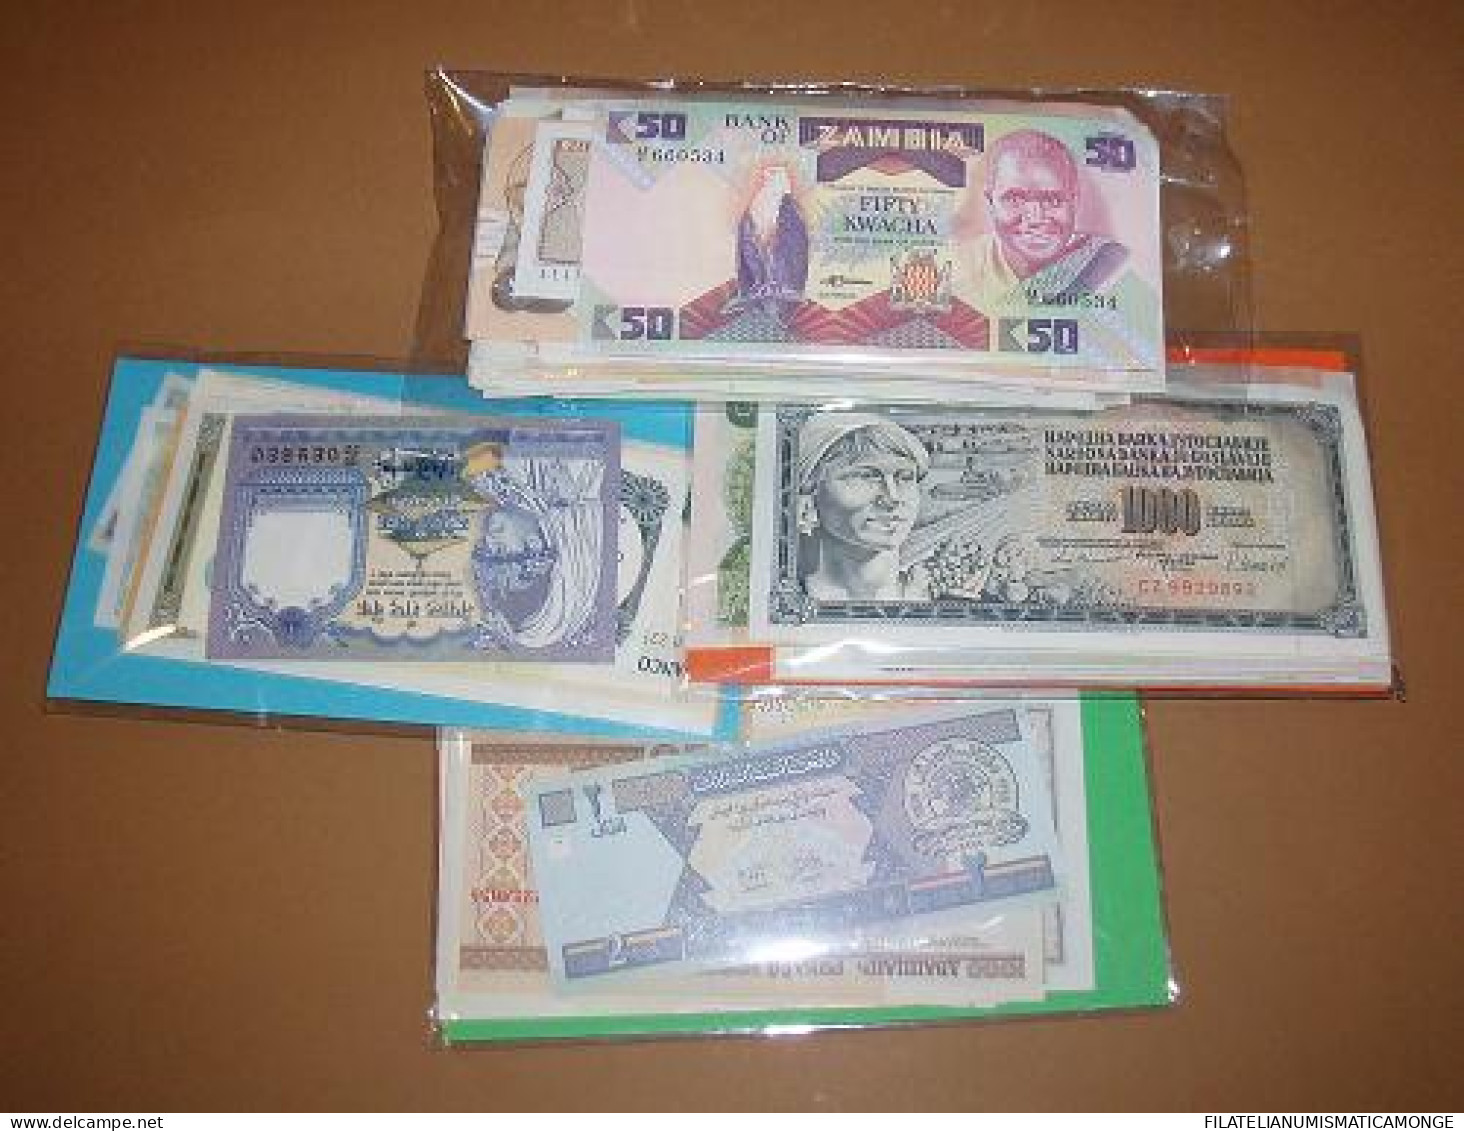  Offer - Lot Banknotes - Paqueteria  Mundial 150 Billetes Diferentes / Foto Gen - Kiloware - Banknoten